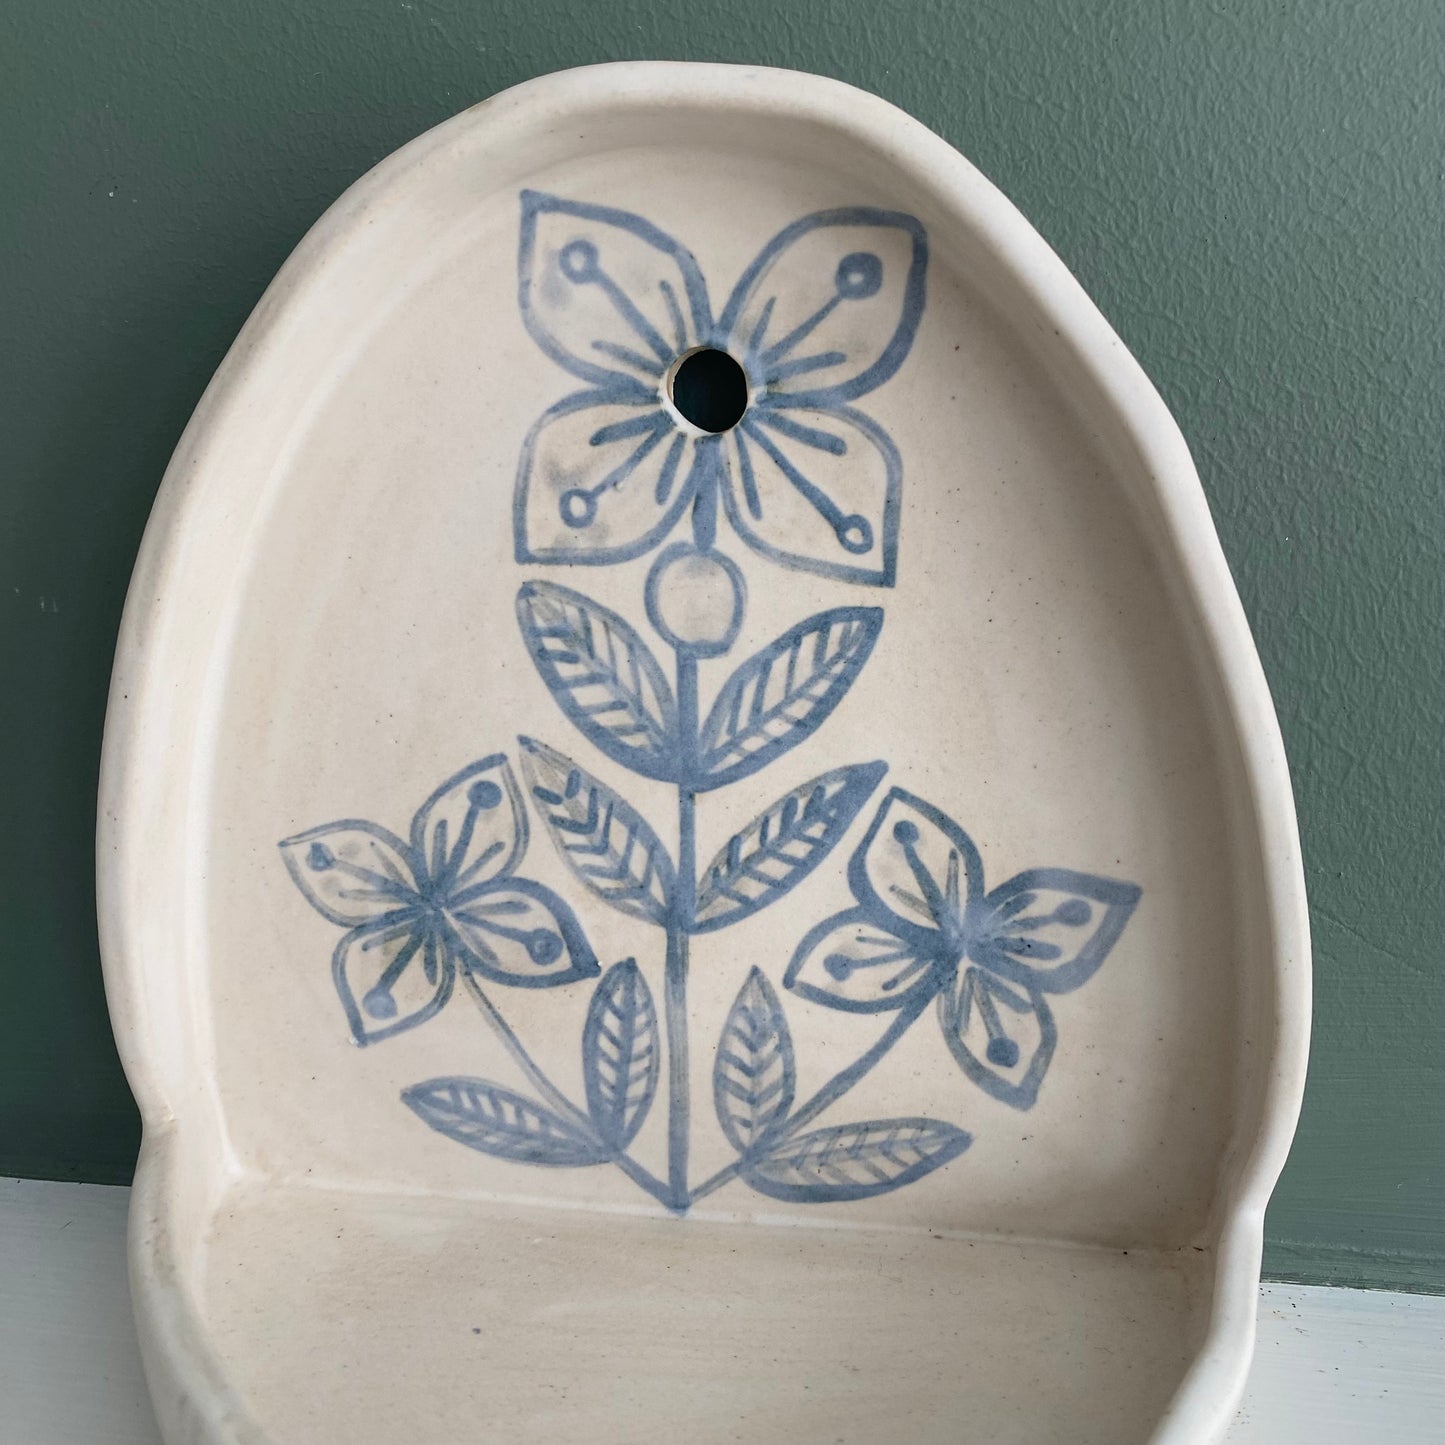 PRE ORDER Ceramic Wall Flower Design candle holder, light blue design with matt glaze candle sconce for votive or tea light candle